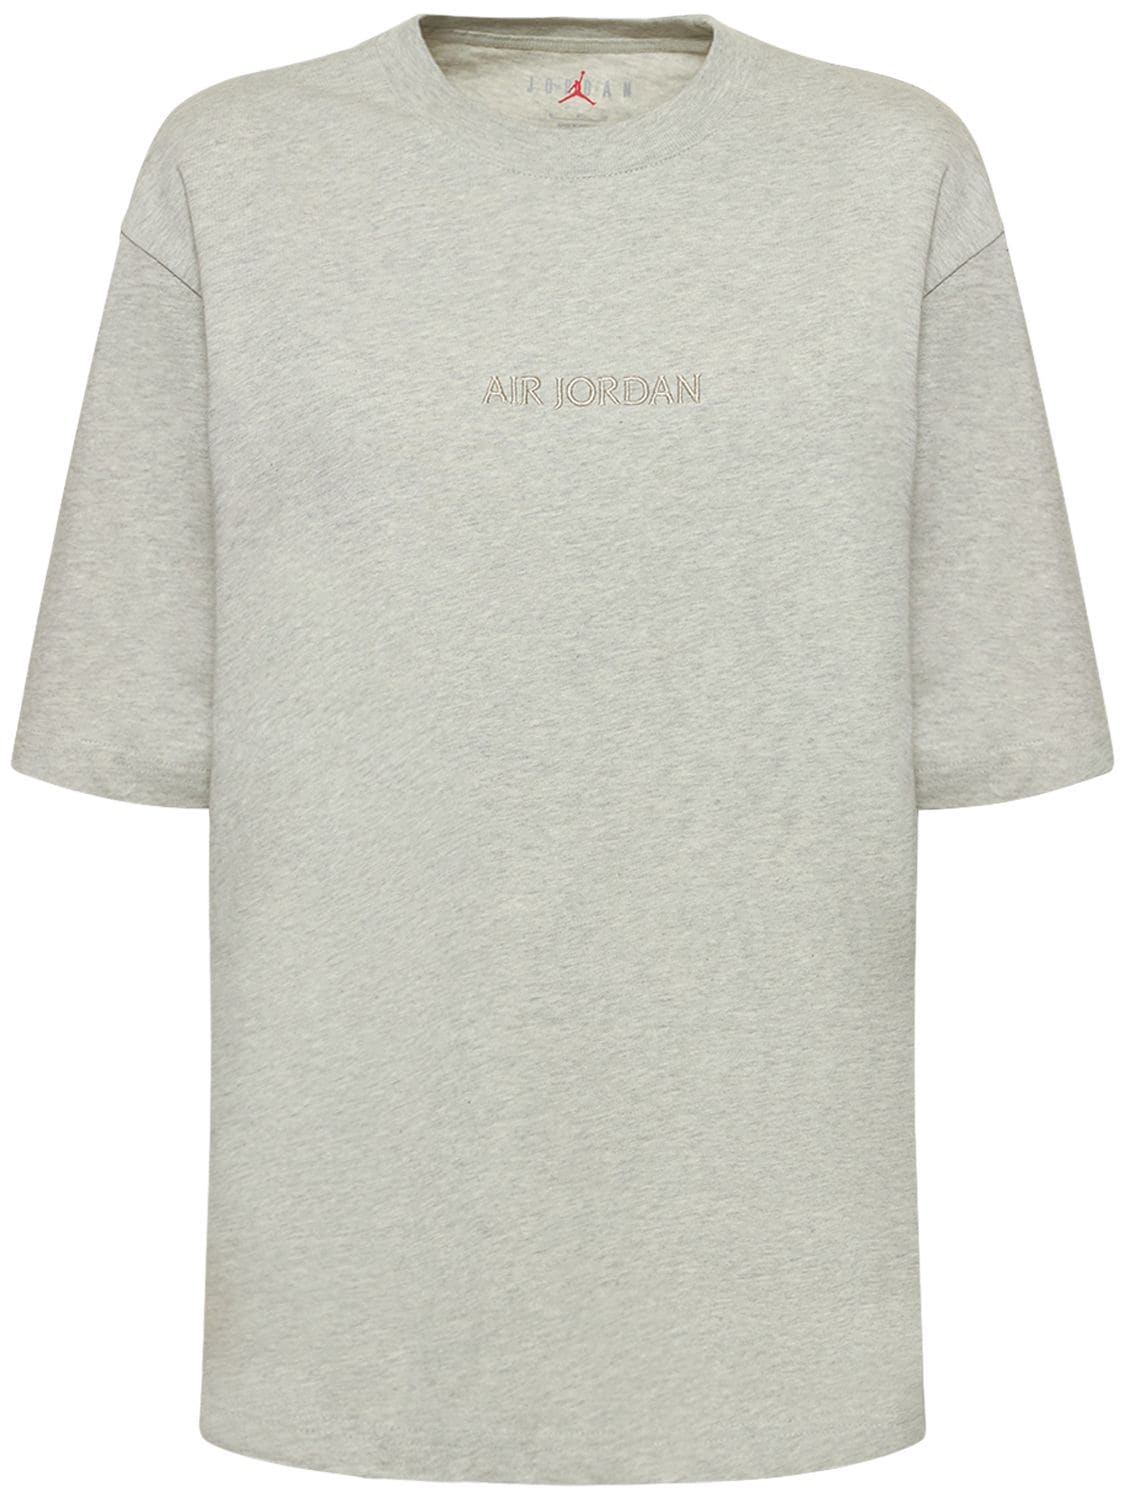 Air Jordan T-shirt – WOMEN > CLOTHING > T-SHIRTS